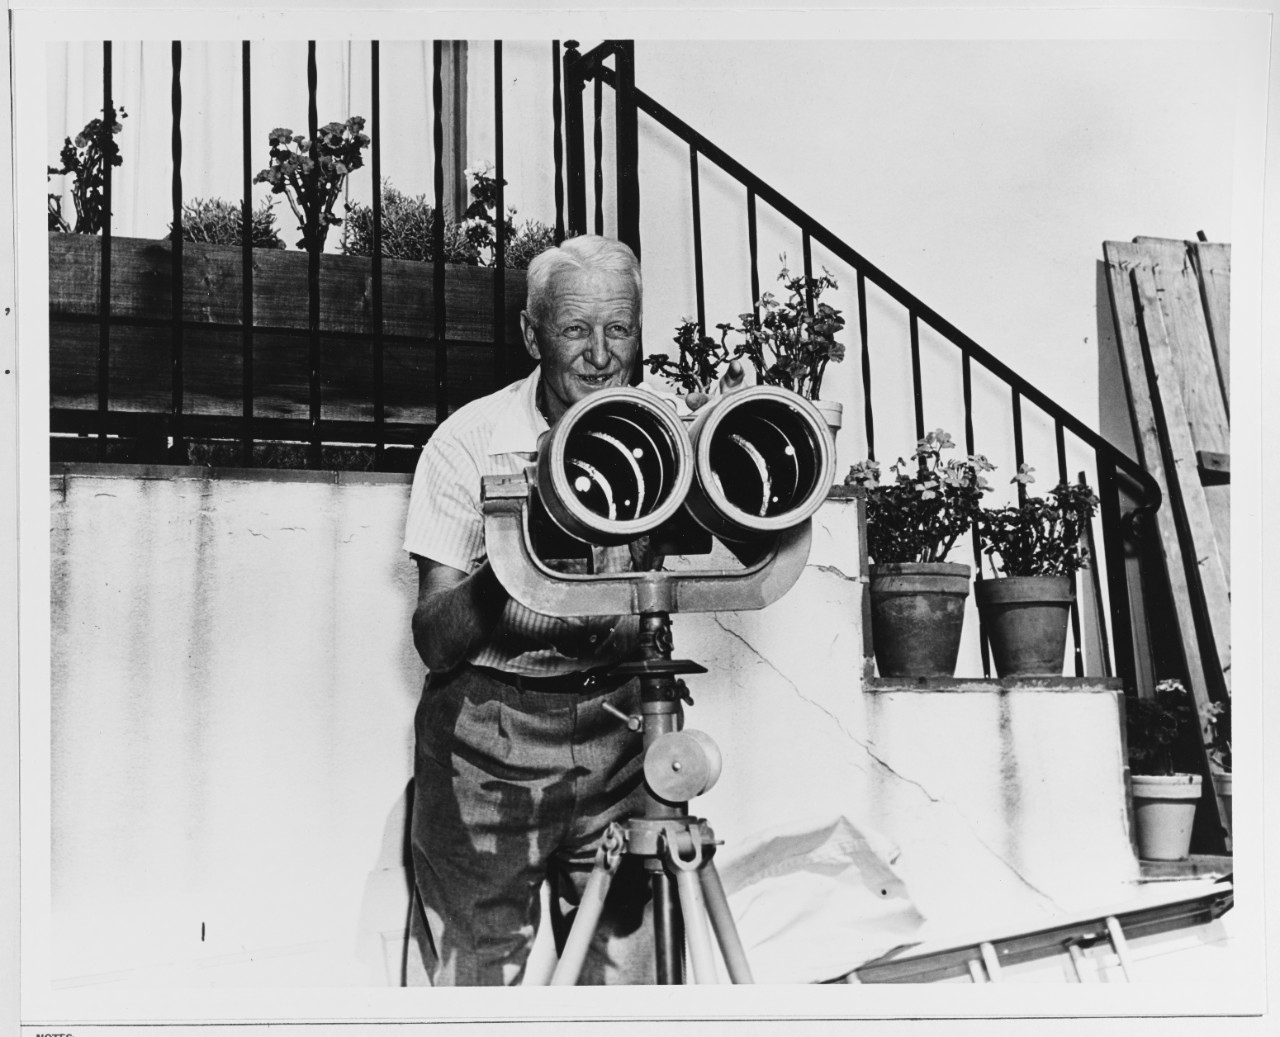 Fleet Admiral Nimitz Poses by his Large Set of Binoculars